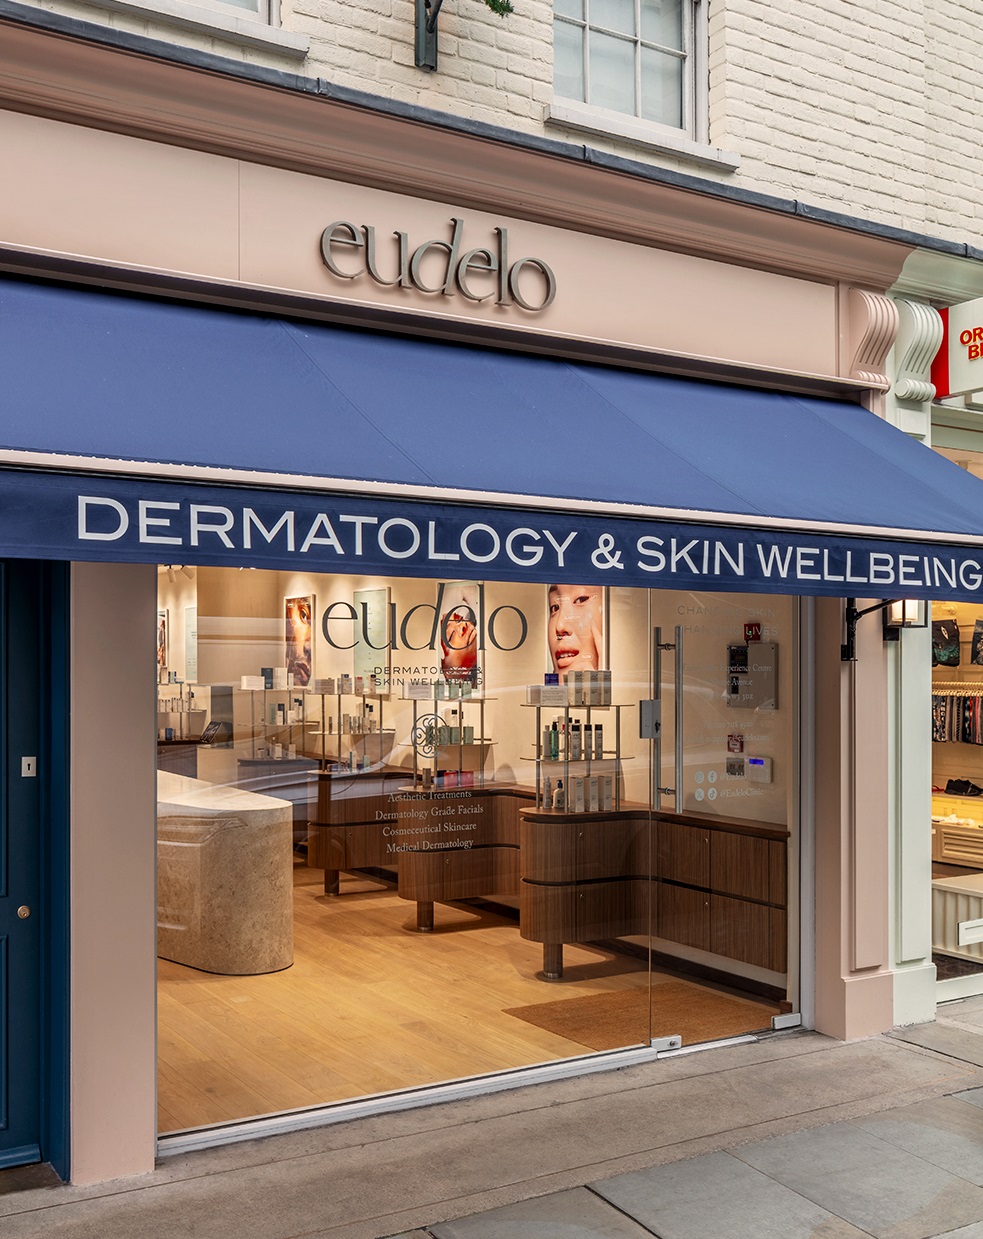 Eudelo Dermatology for treating acne